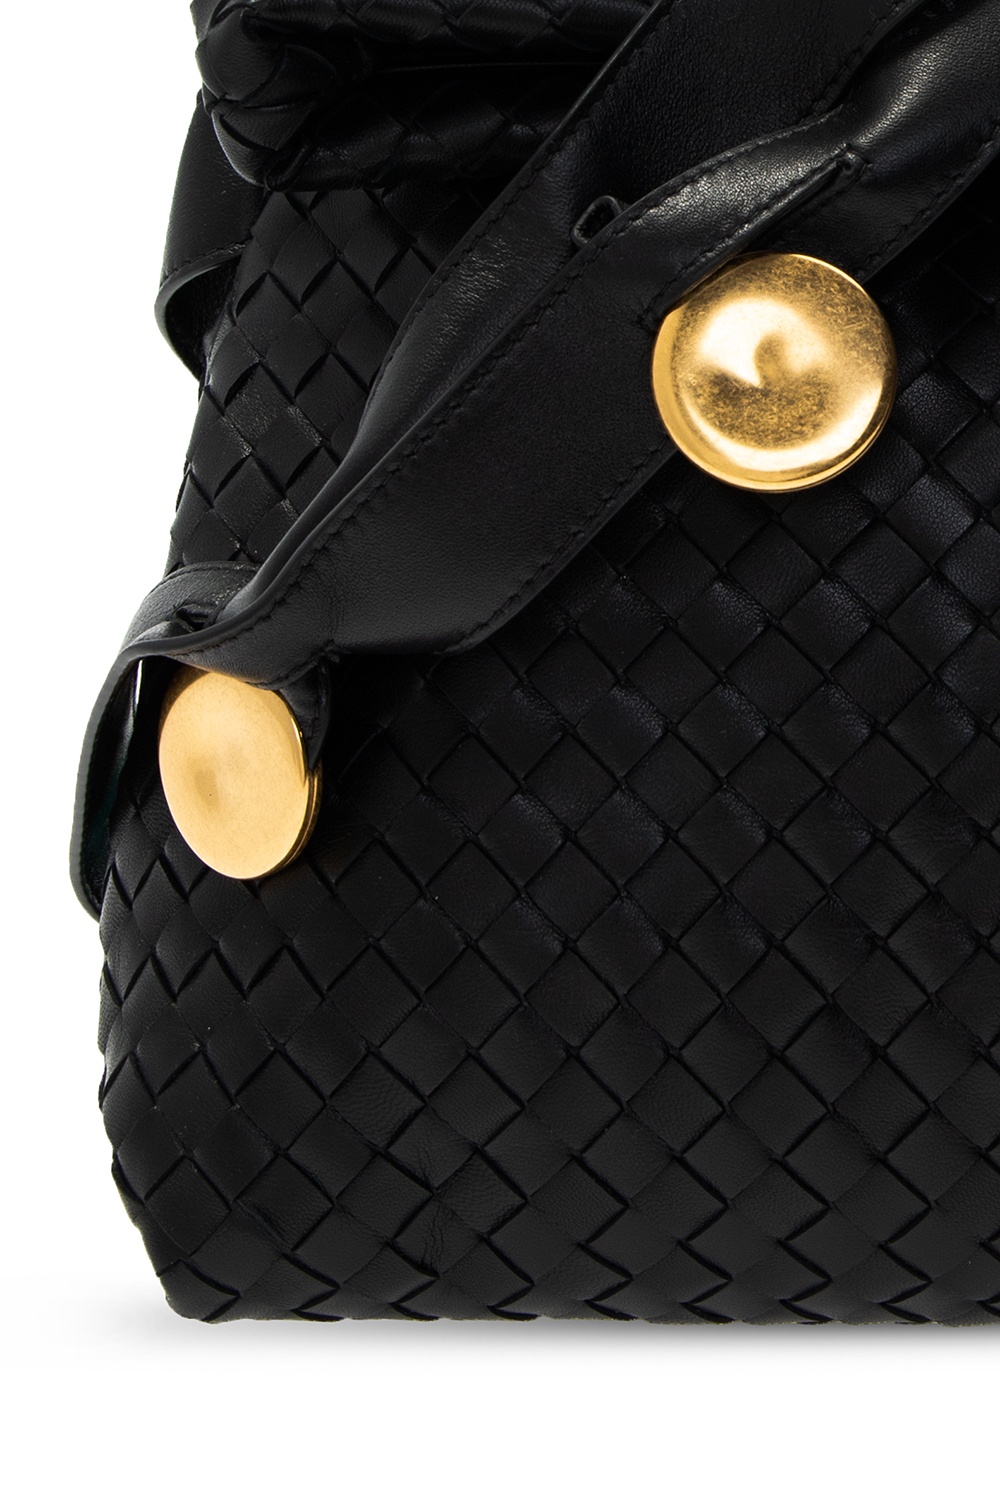 Louis Vuitton Vernice Shoulder Bag and Bottega Veneta Bifold Wallet for  Sale in Santee, CA - OfferUp